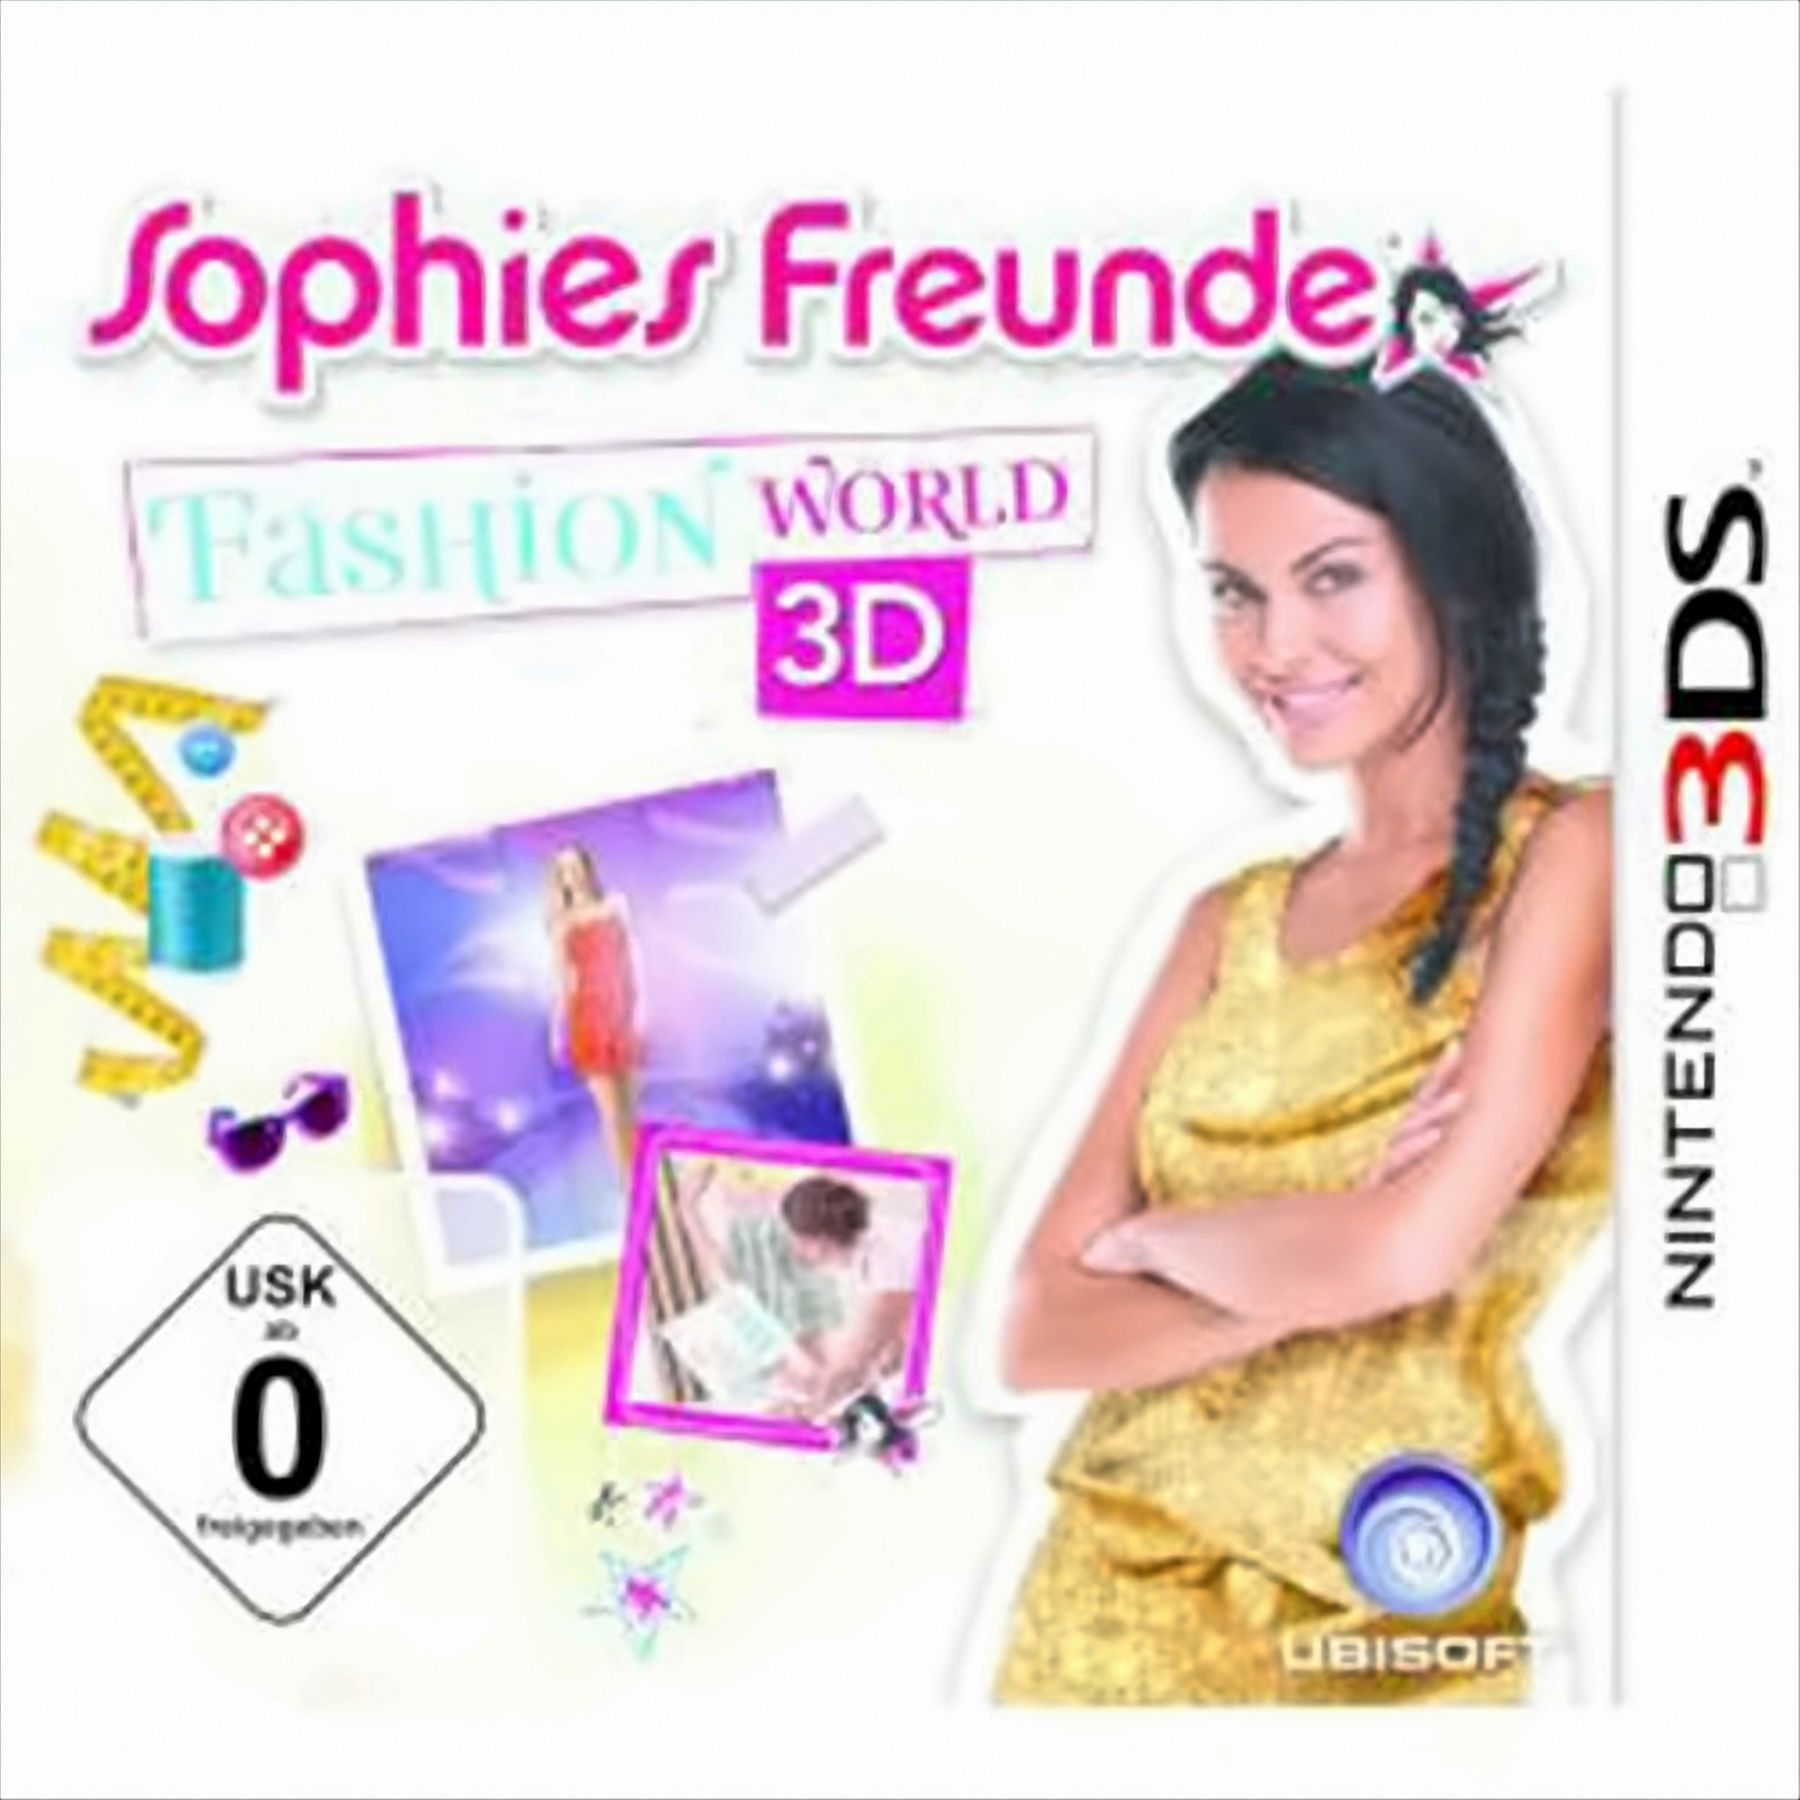 Sophies Freunde: Fashion World 3D 3DS] - [Nintendo